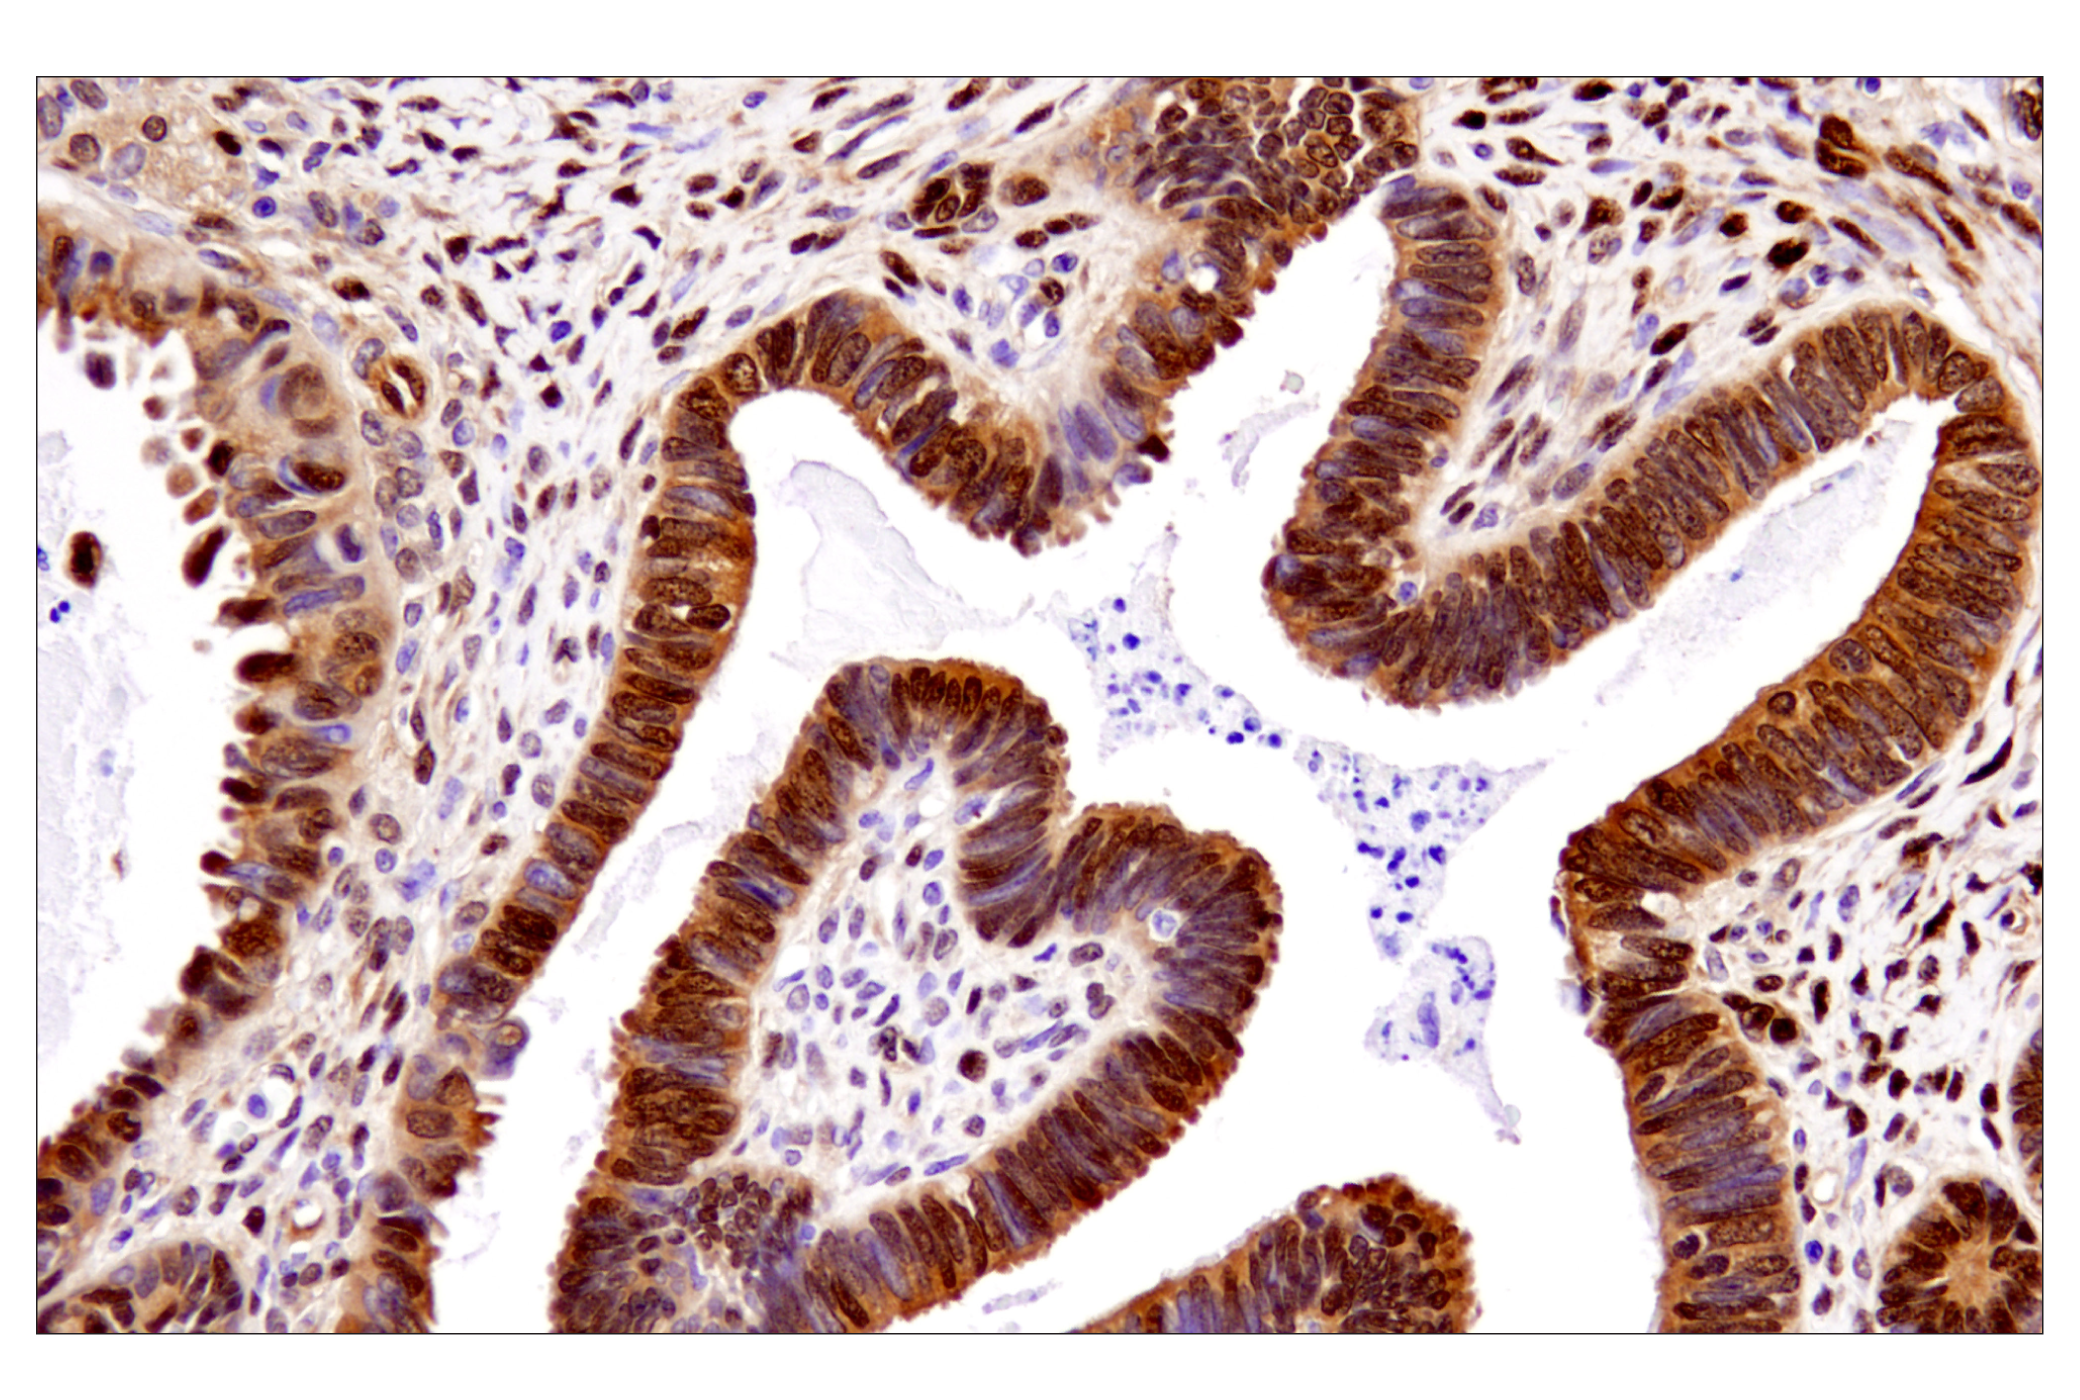  Image 20: PhosphoPlus® YAP (Ser127) Antibody Duet